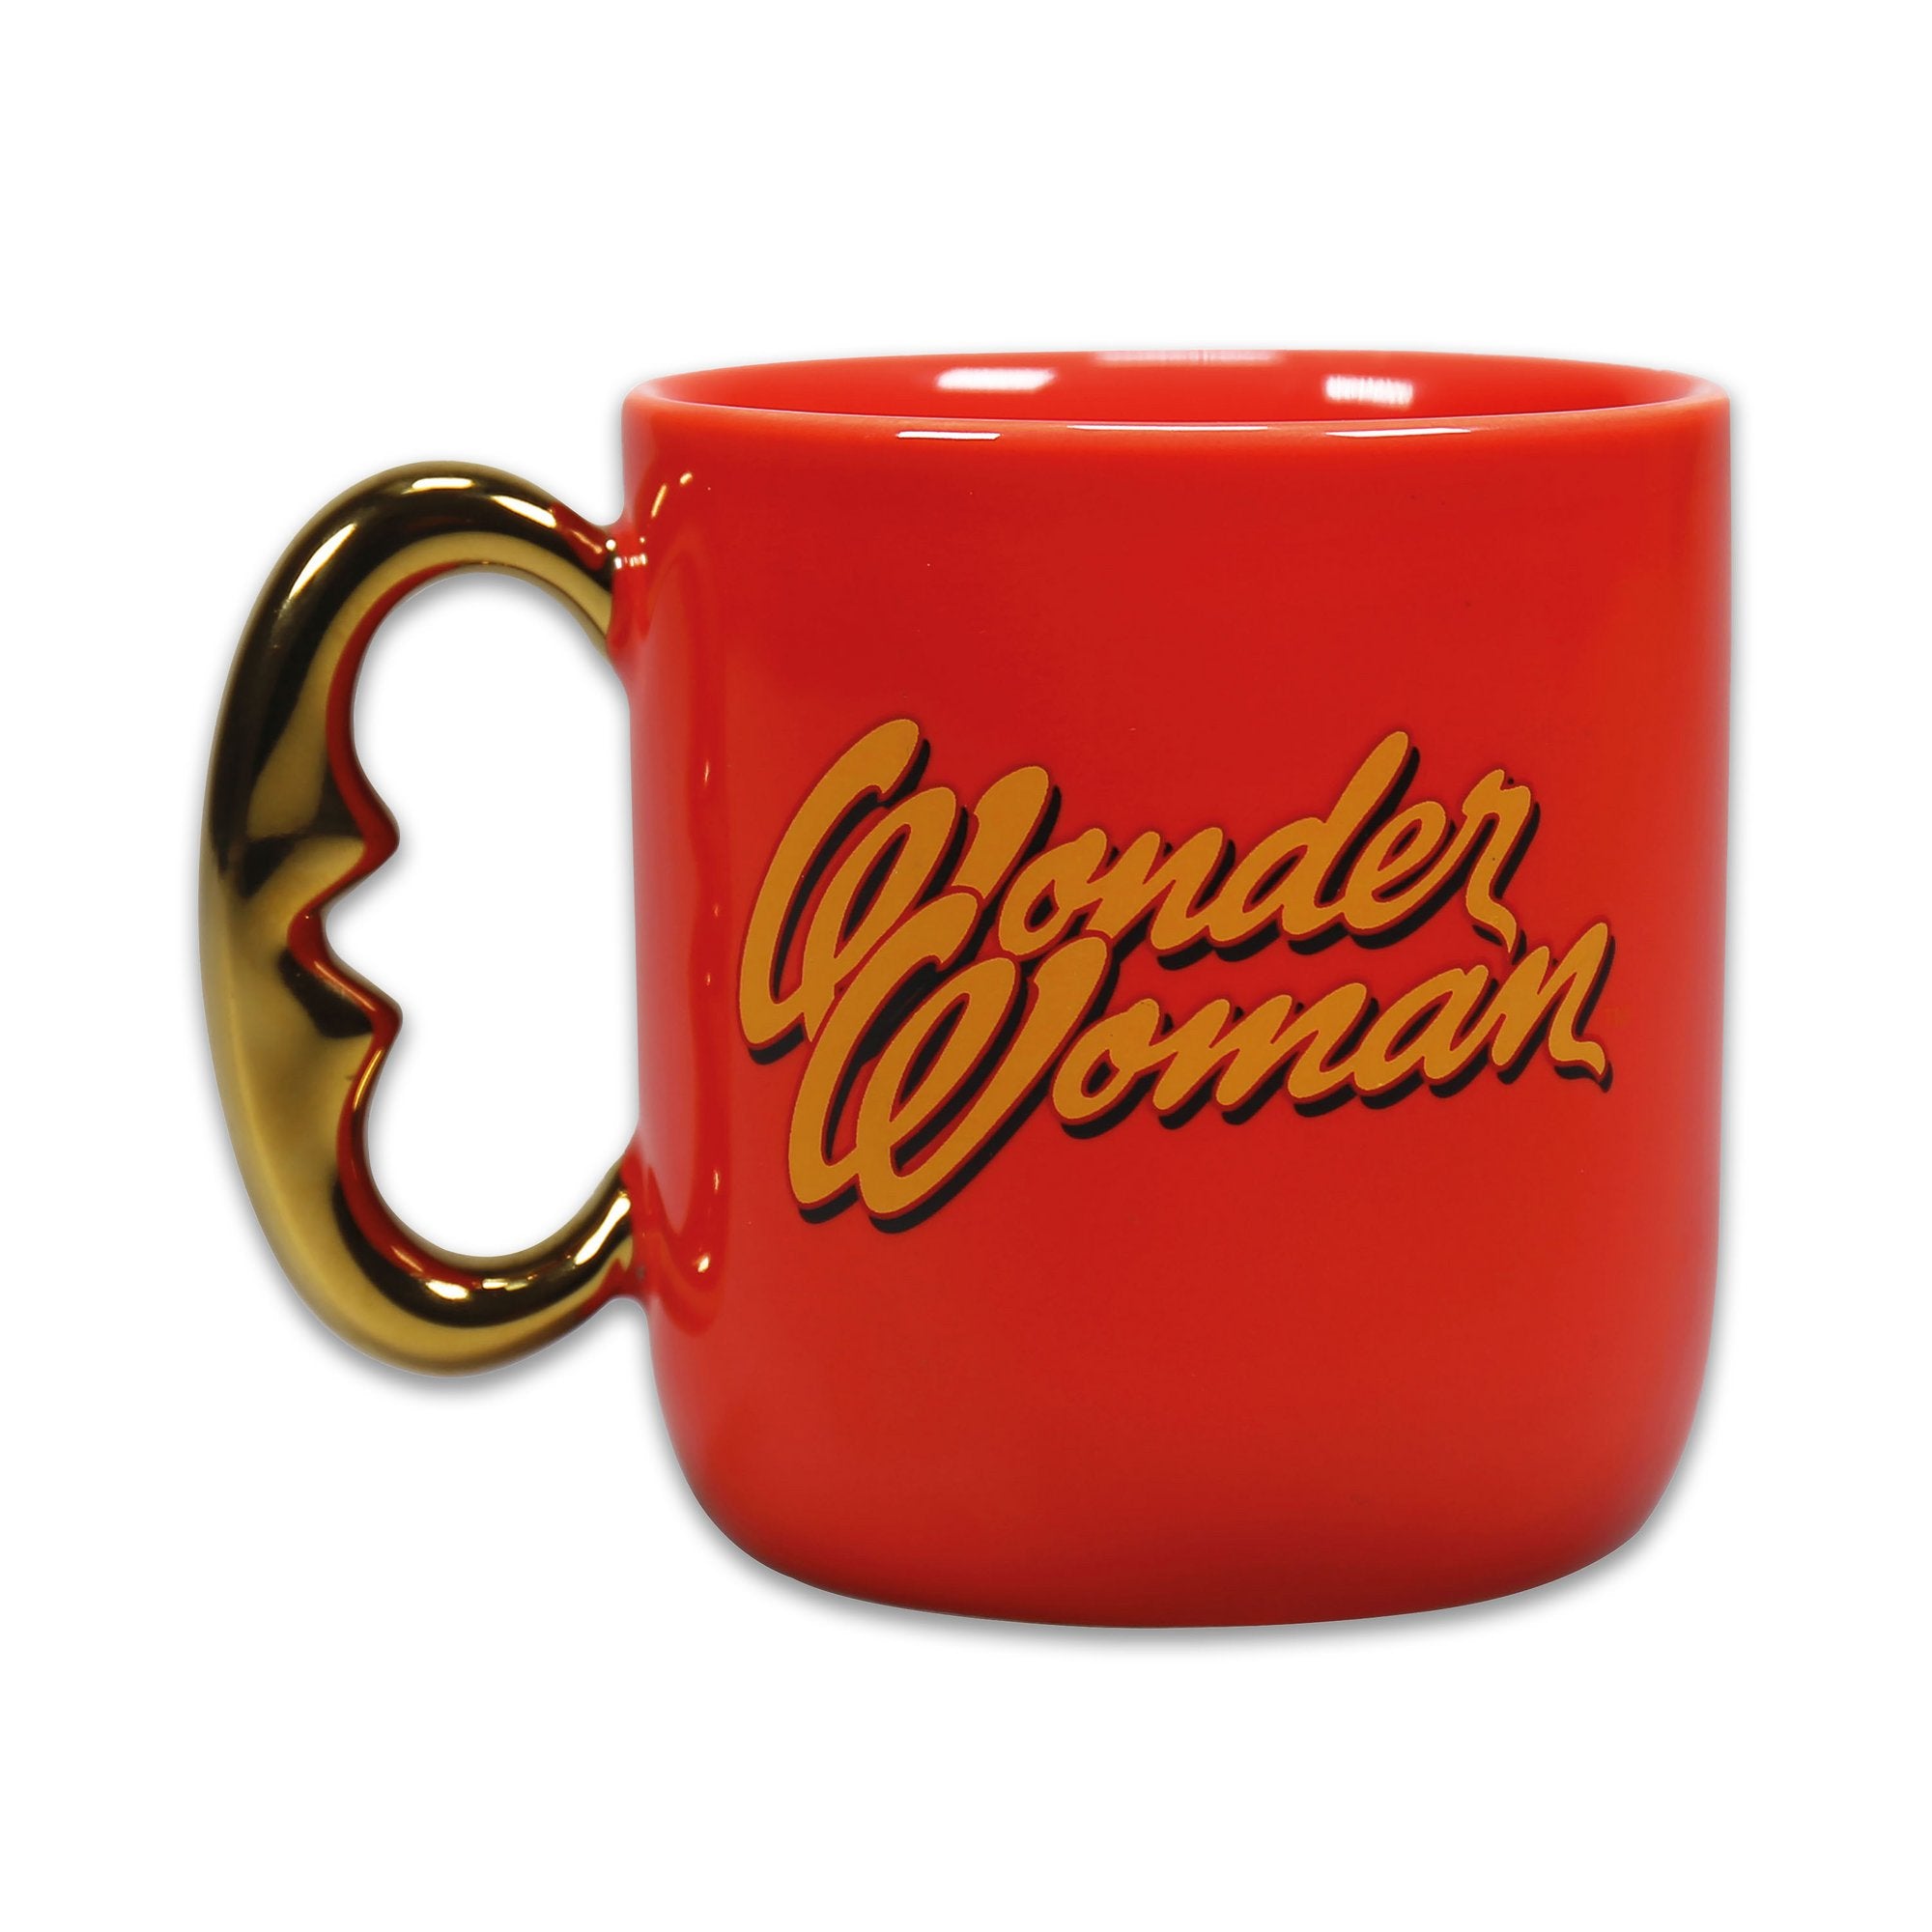 Wonder Woman 'Belive in' Boxed Shaped Mug